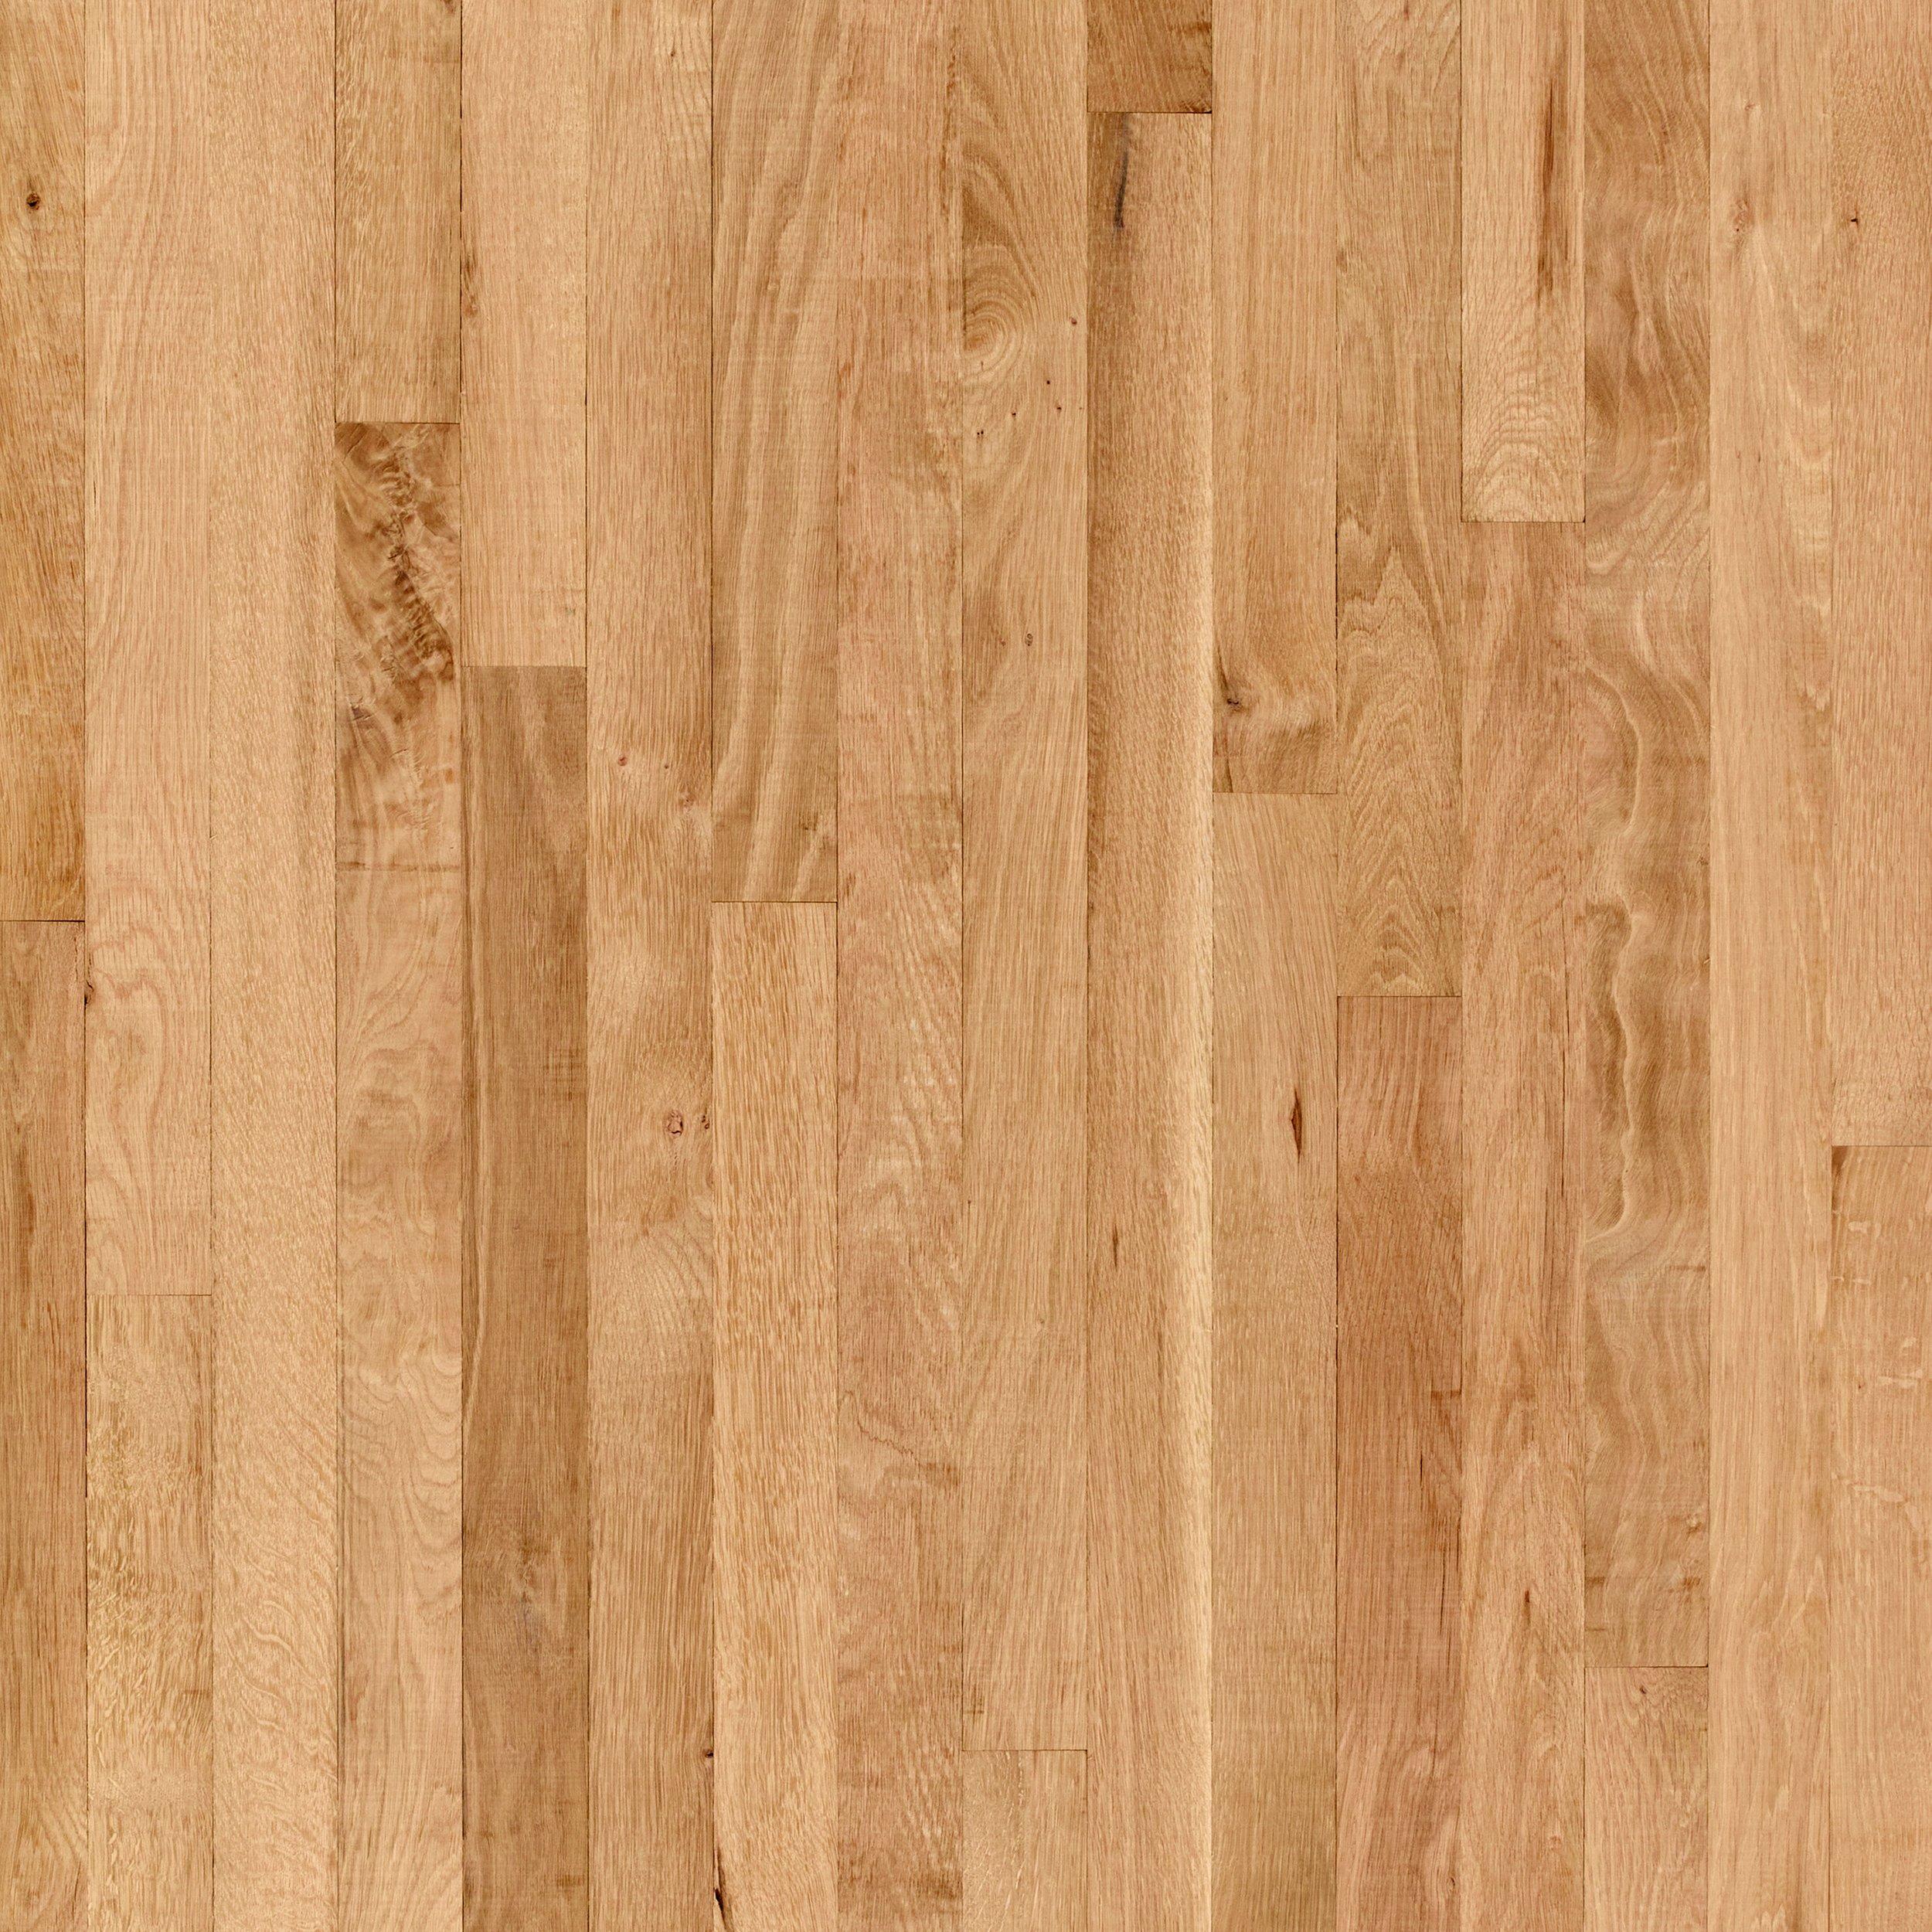 Unfinished White Oak Solid Hardwood 1 Common Grade